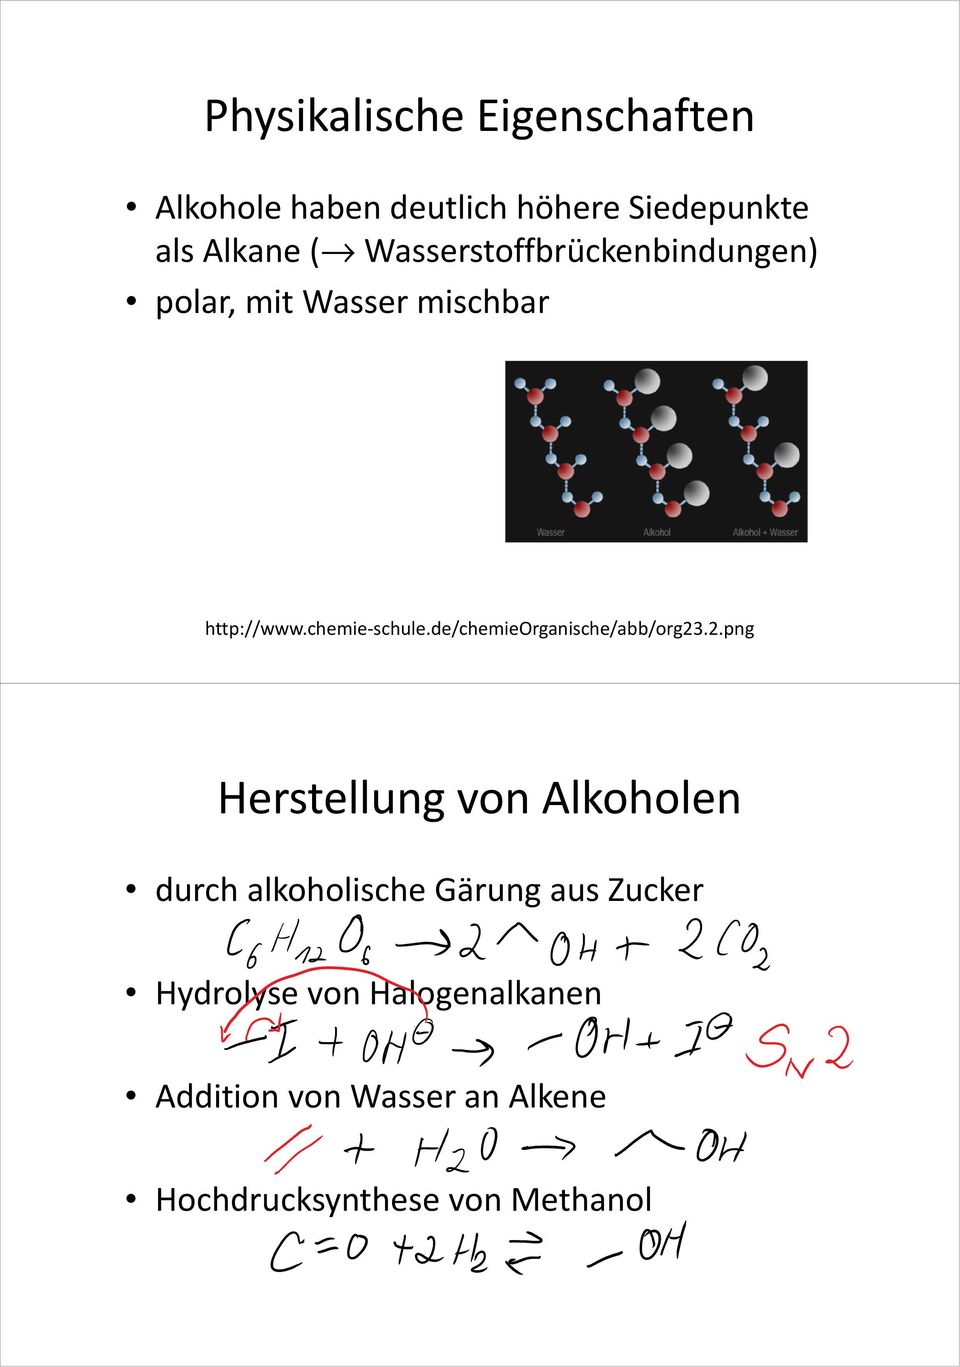 de/chemieorganische/abb/org23